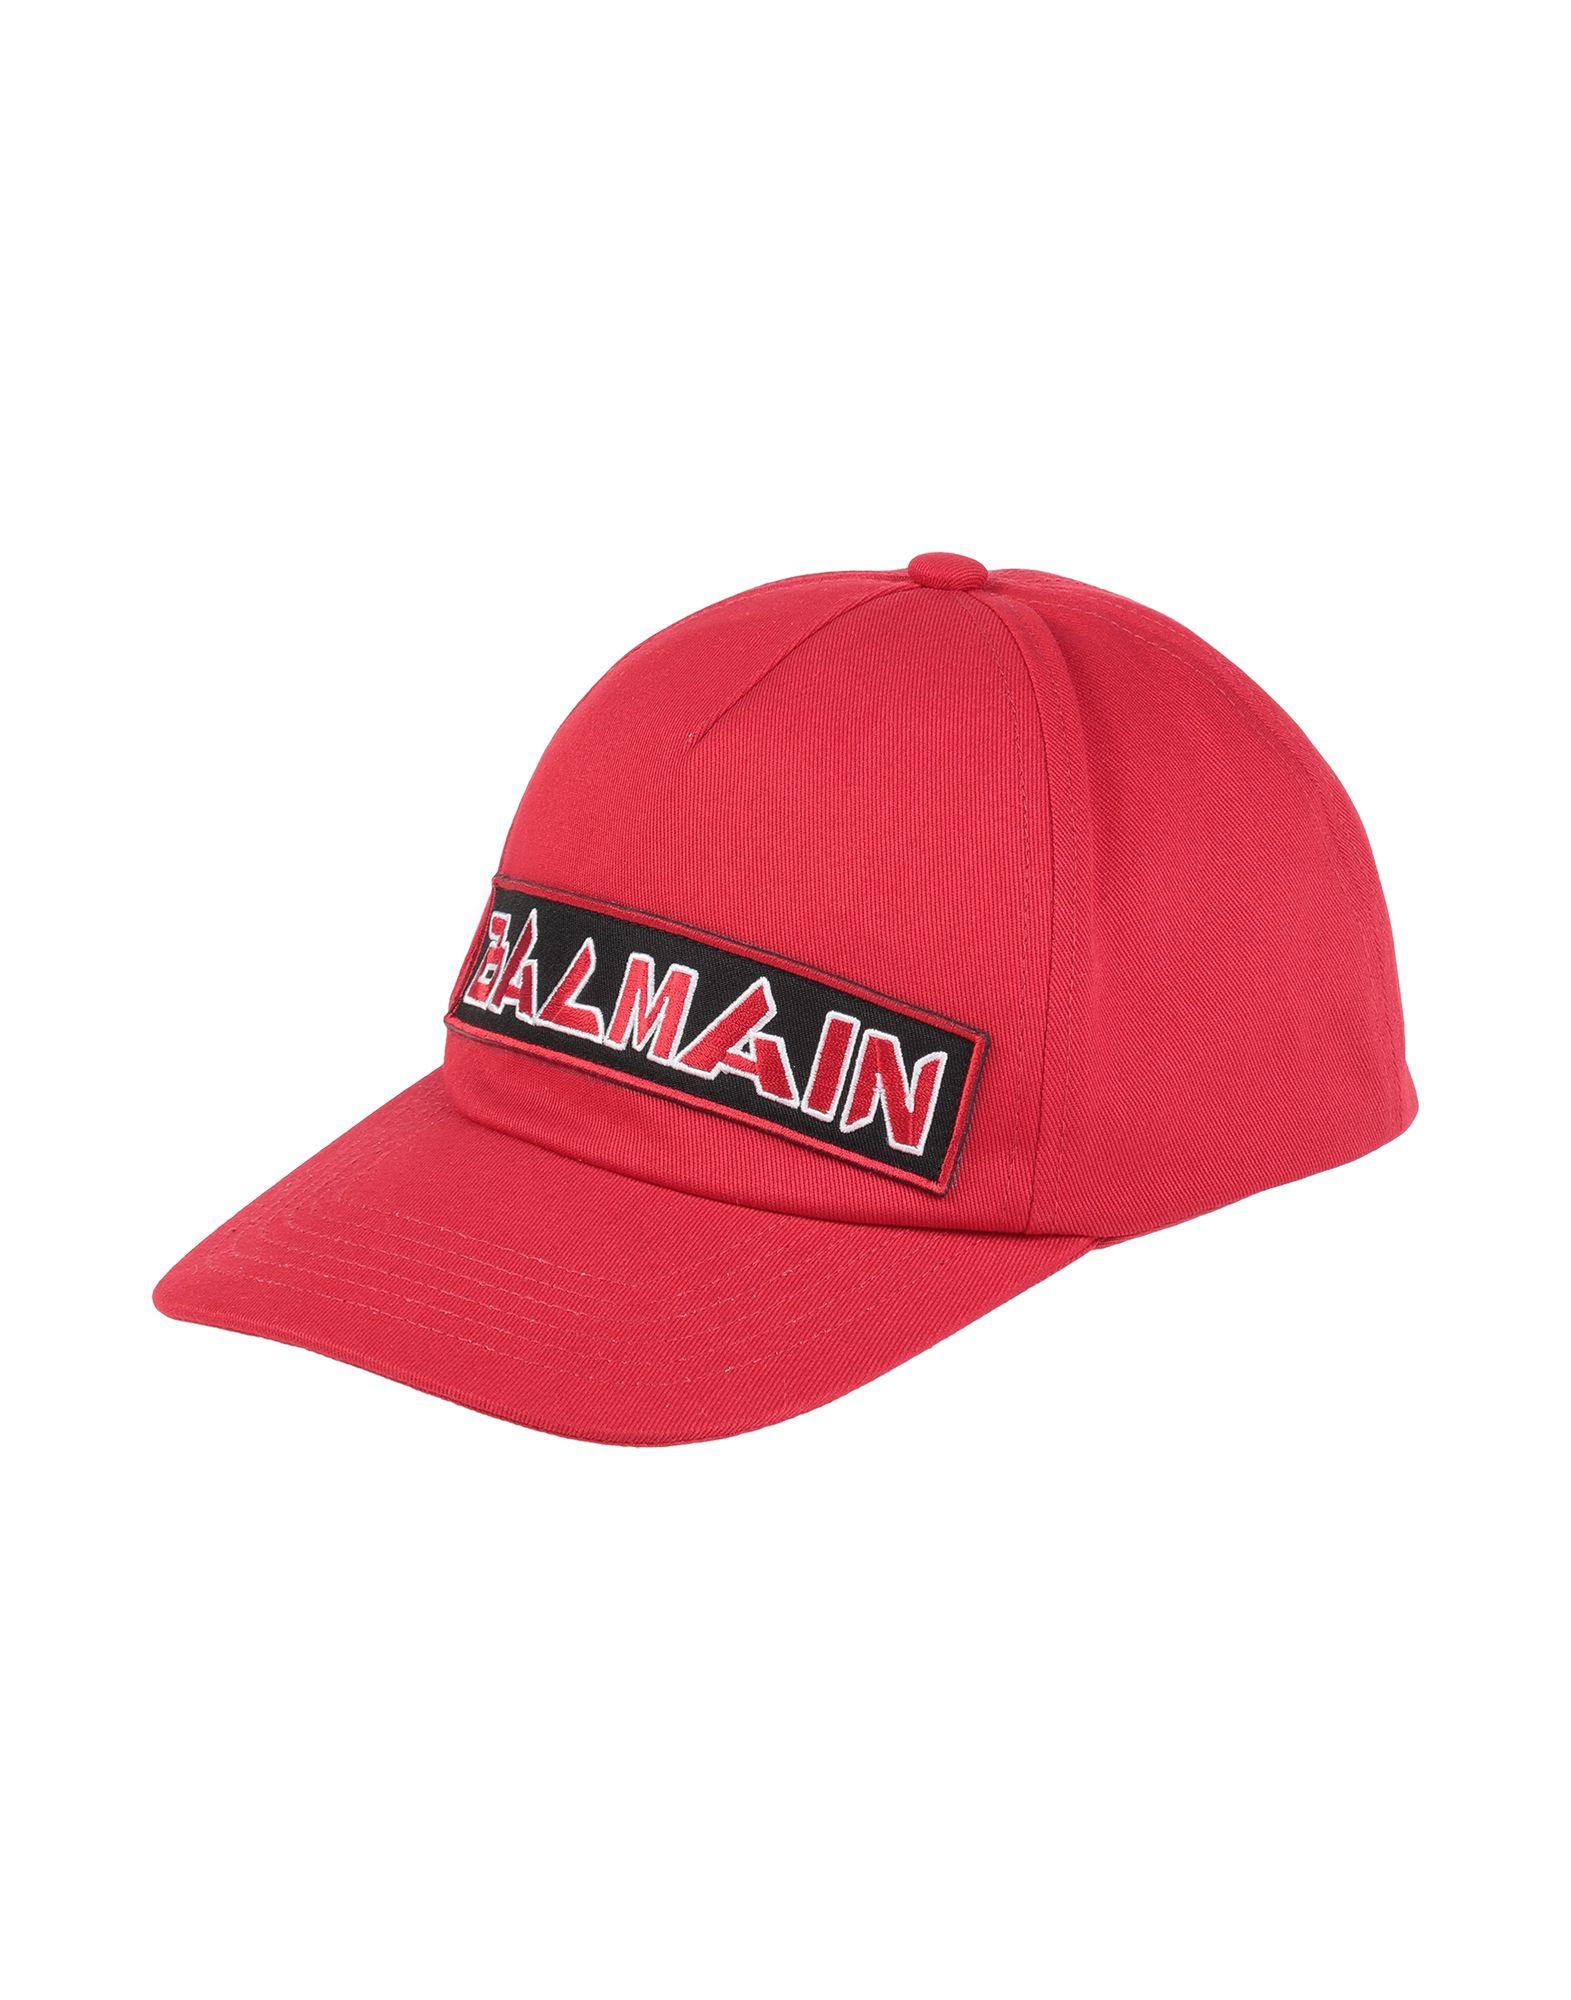 Balmain Cotton Hat in Red for Men - Lyst